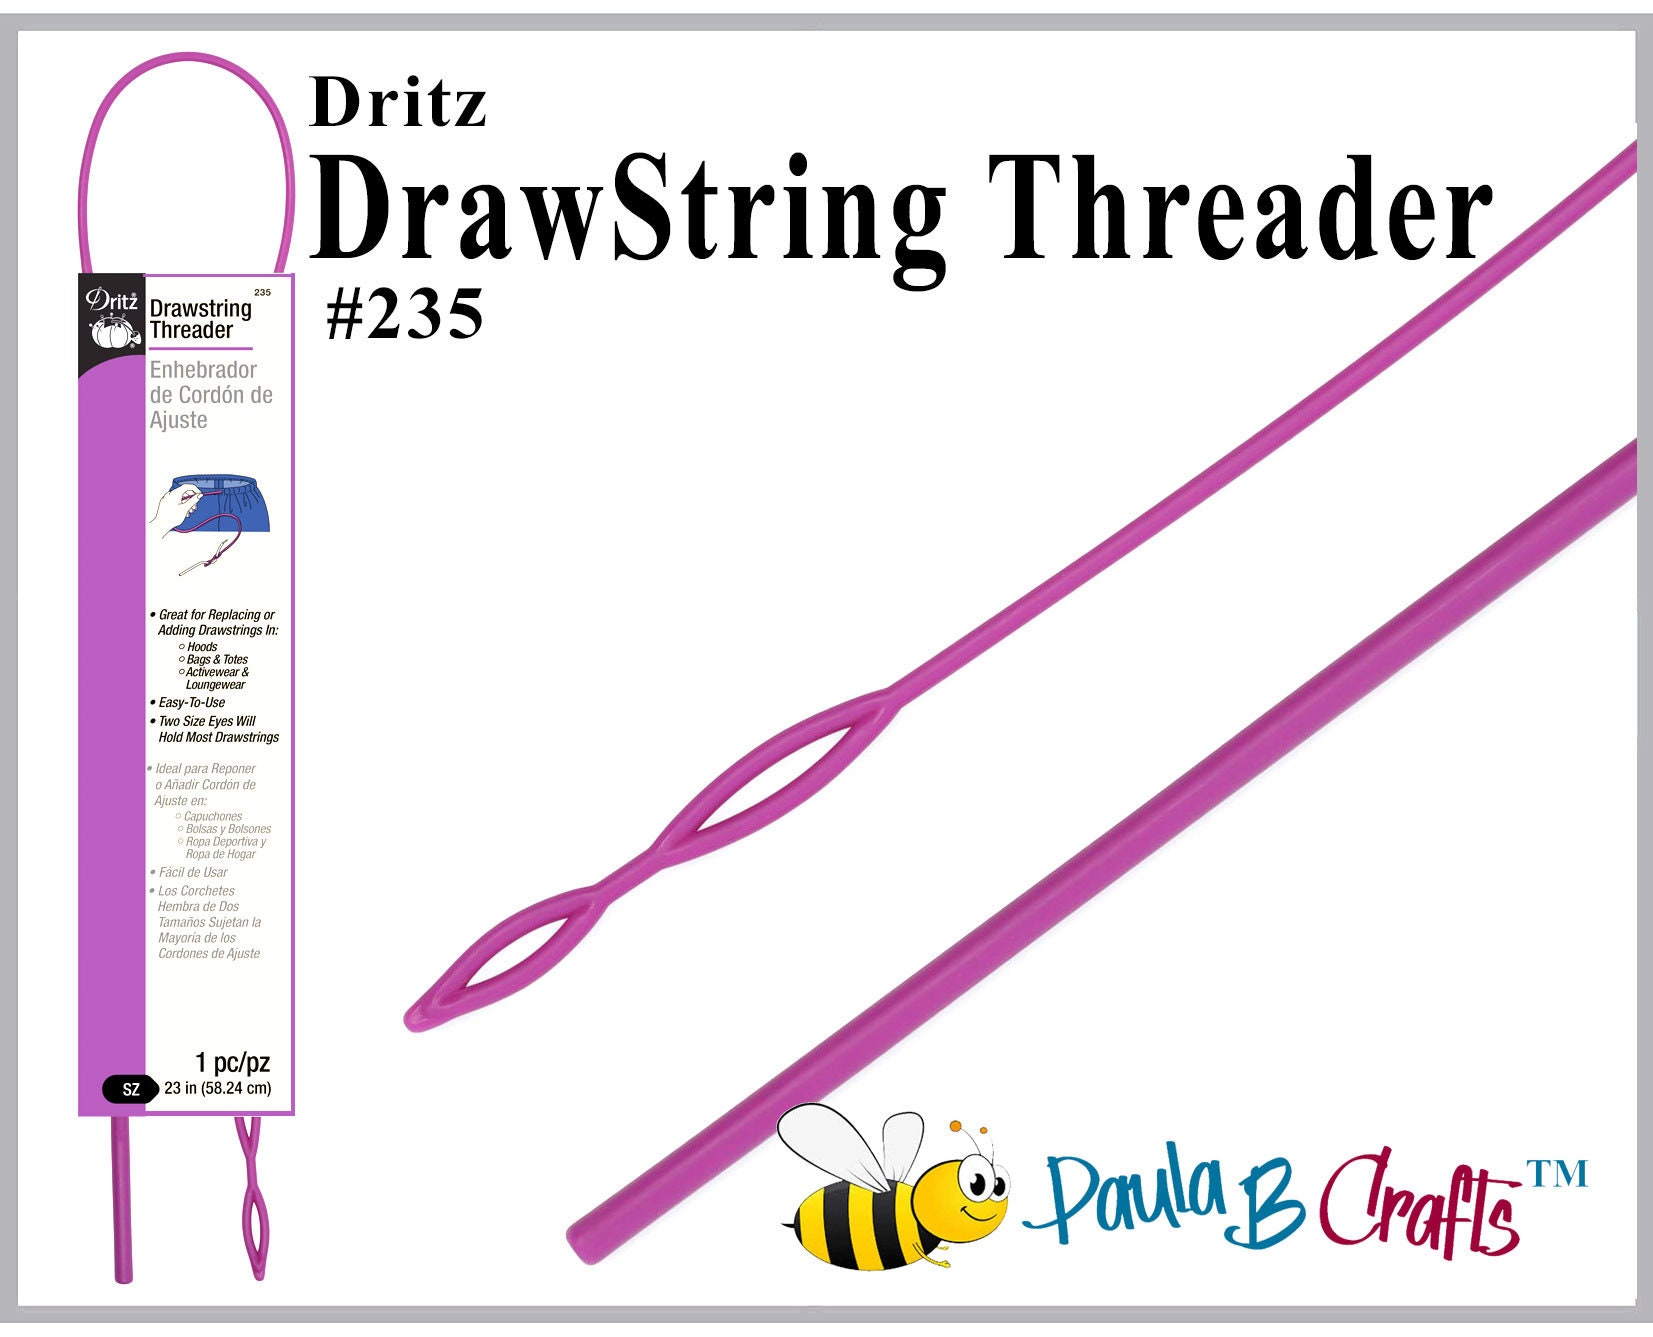 Dritz Drawstring Threader Add or Replace Drawstrings in Hoodies